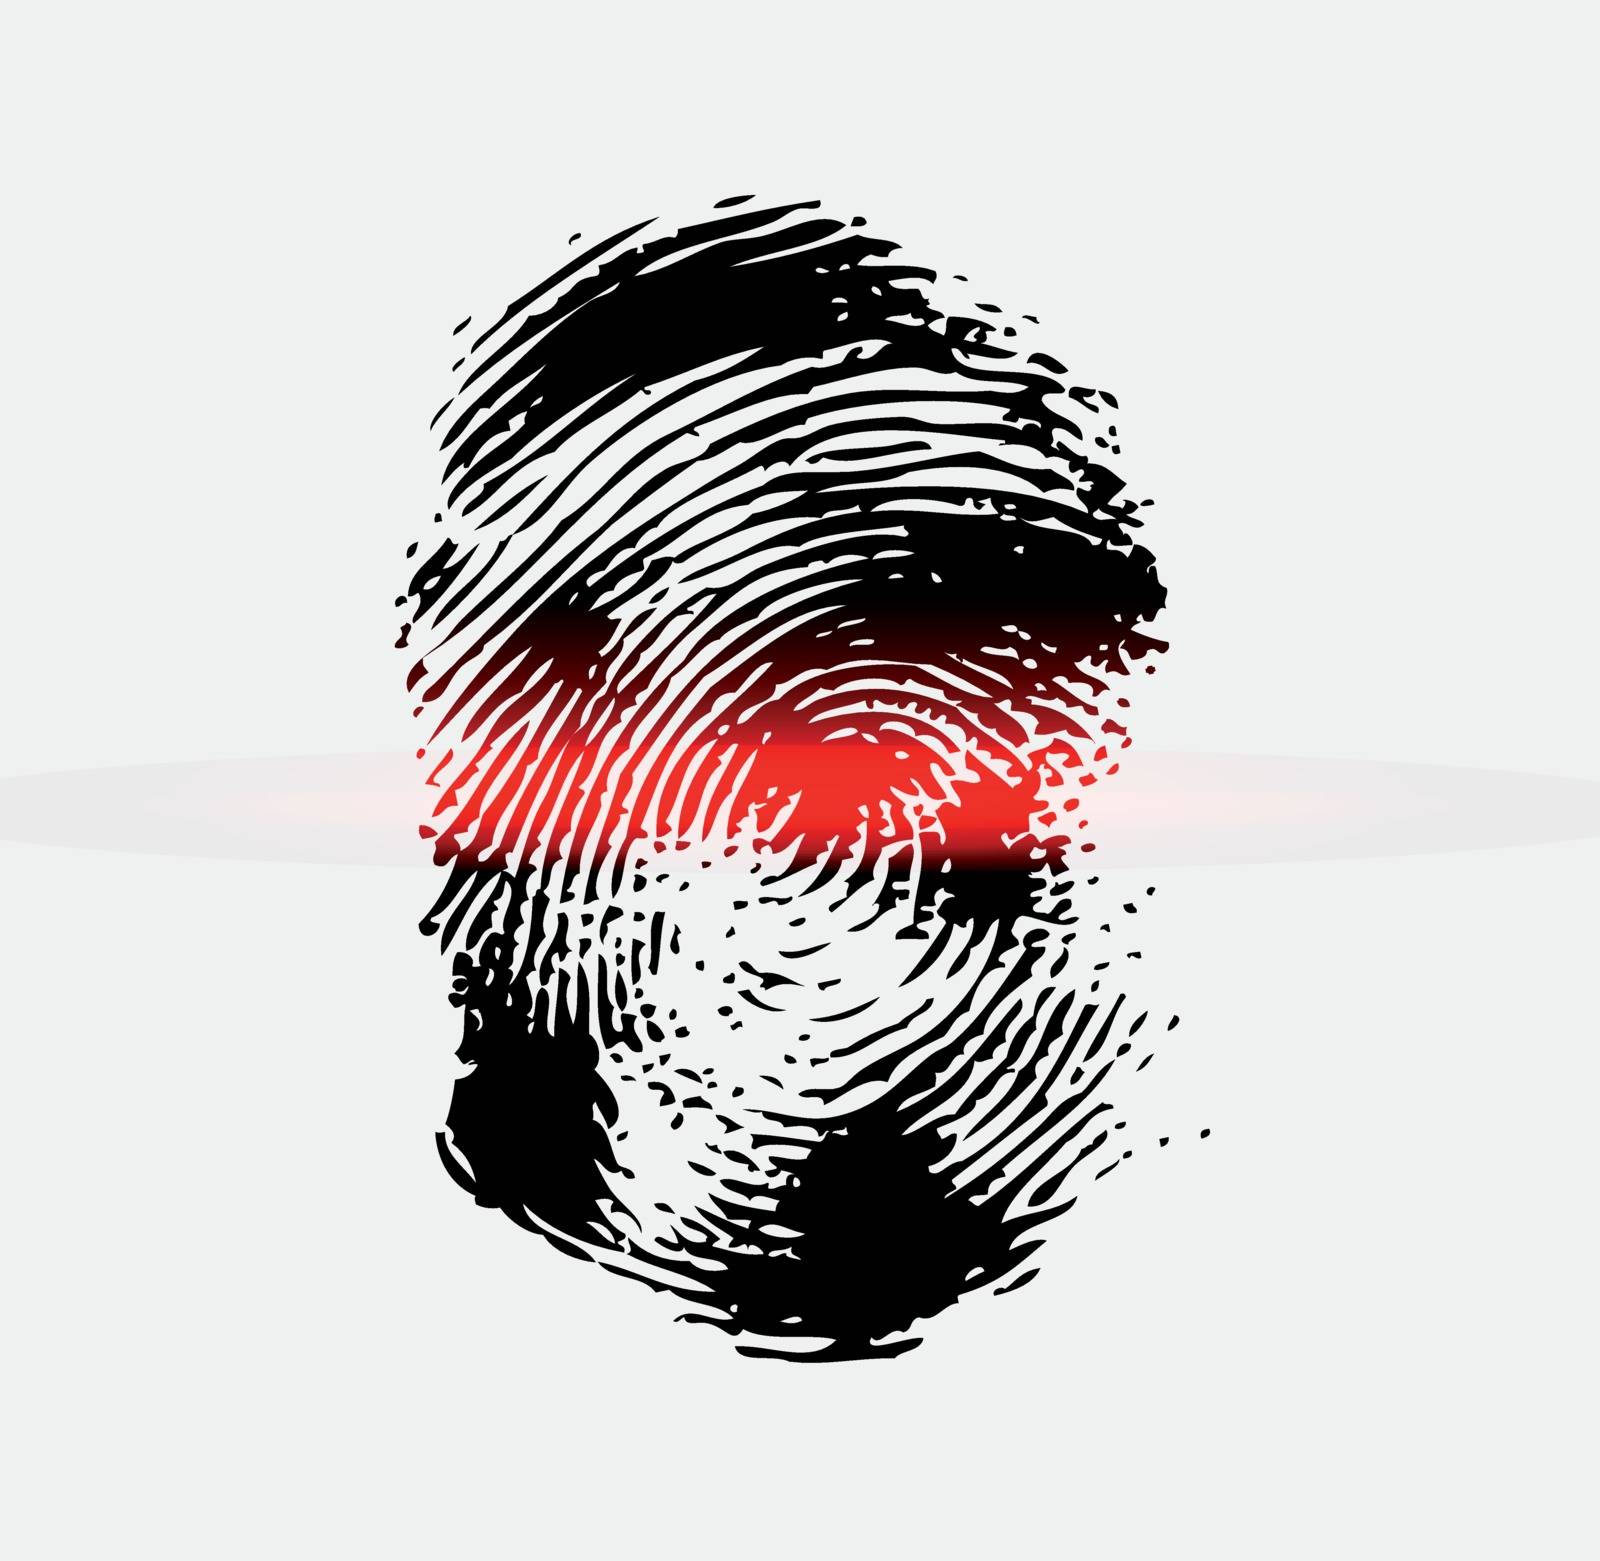 Ray scanner scan fingerprint by sermax55